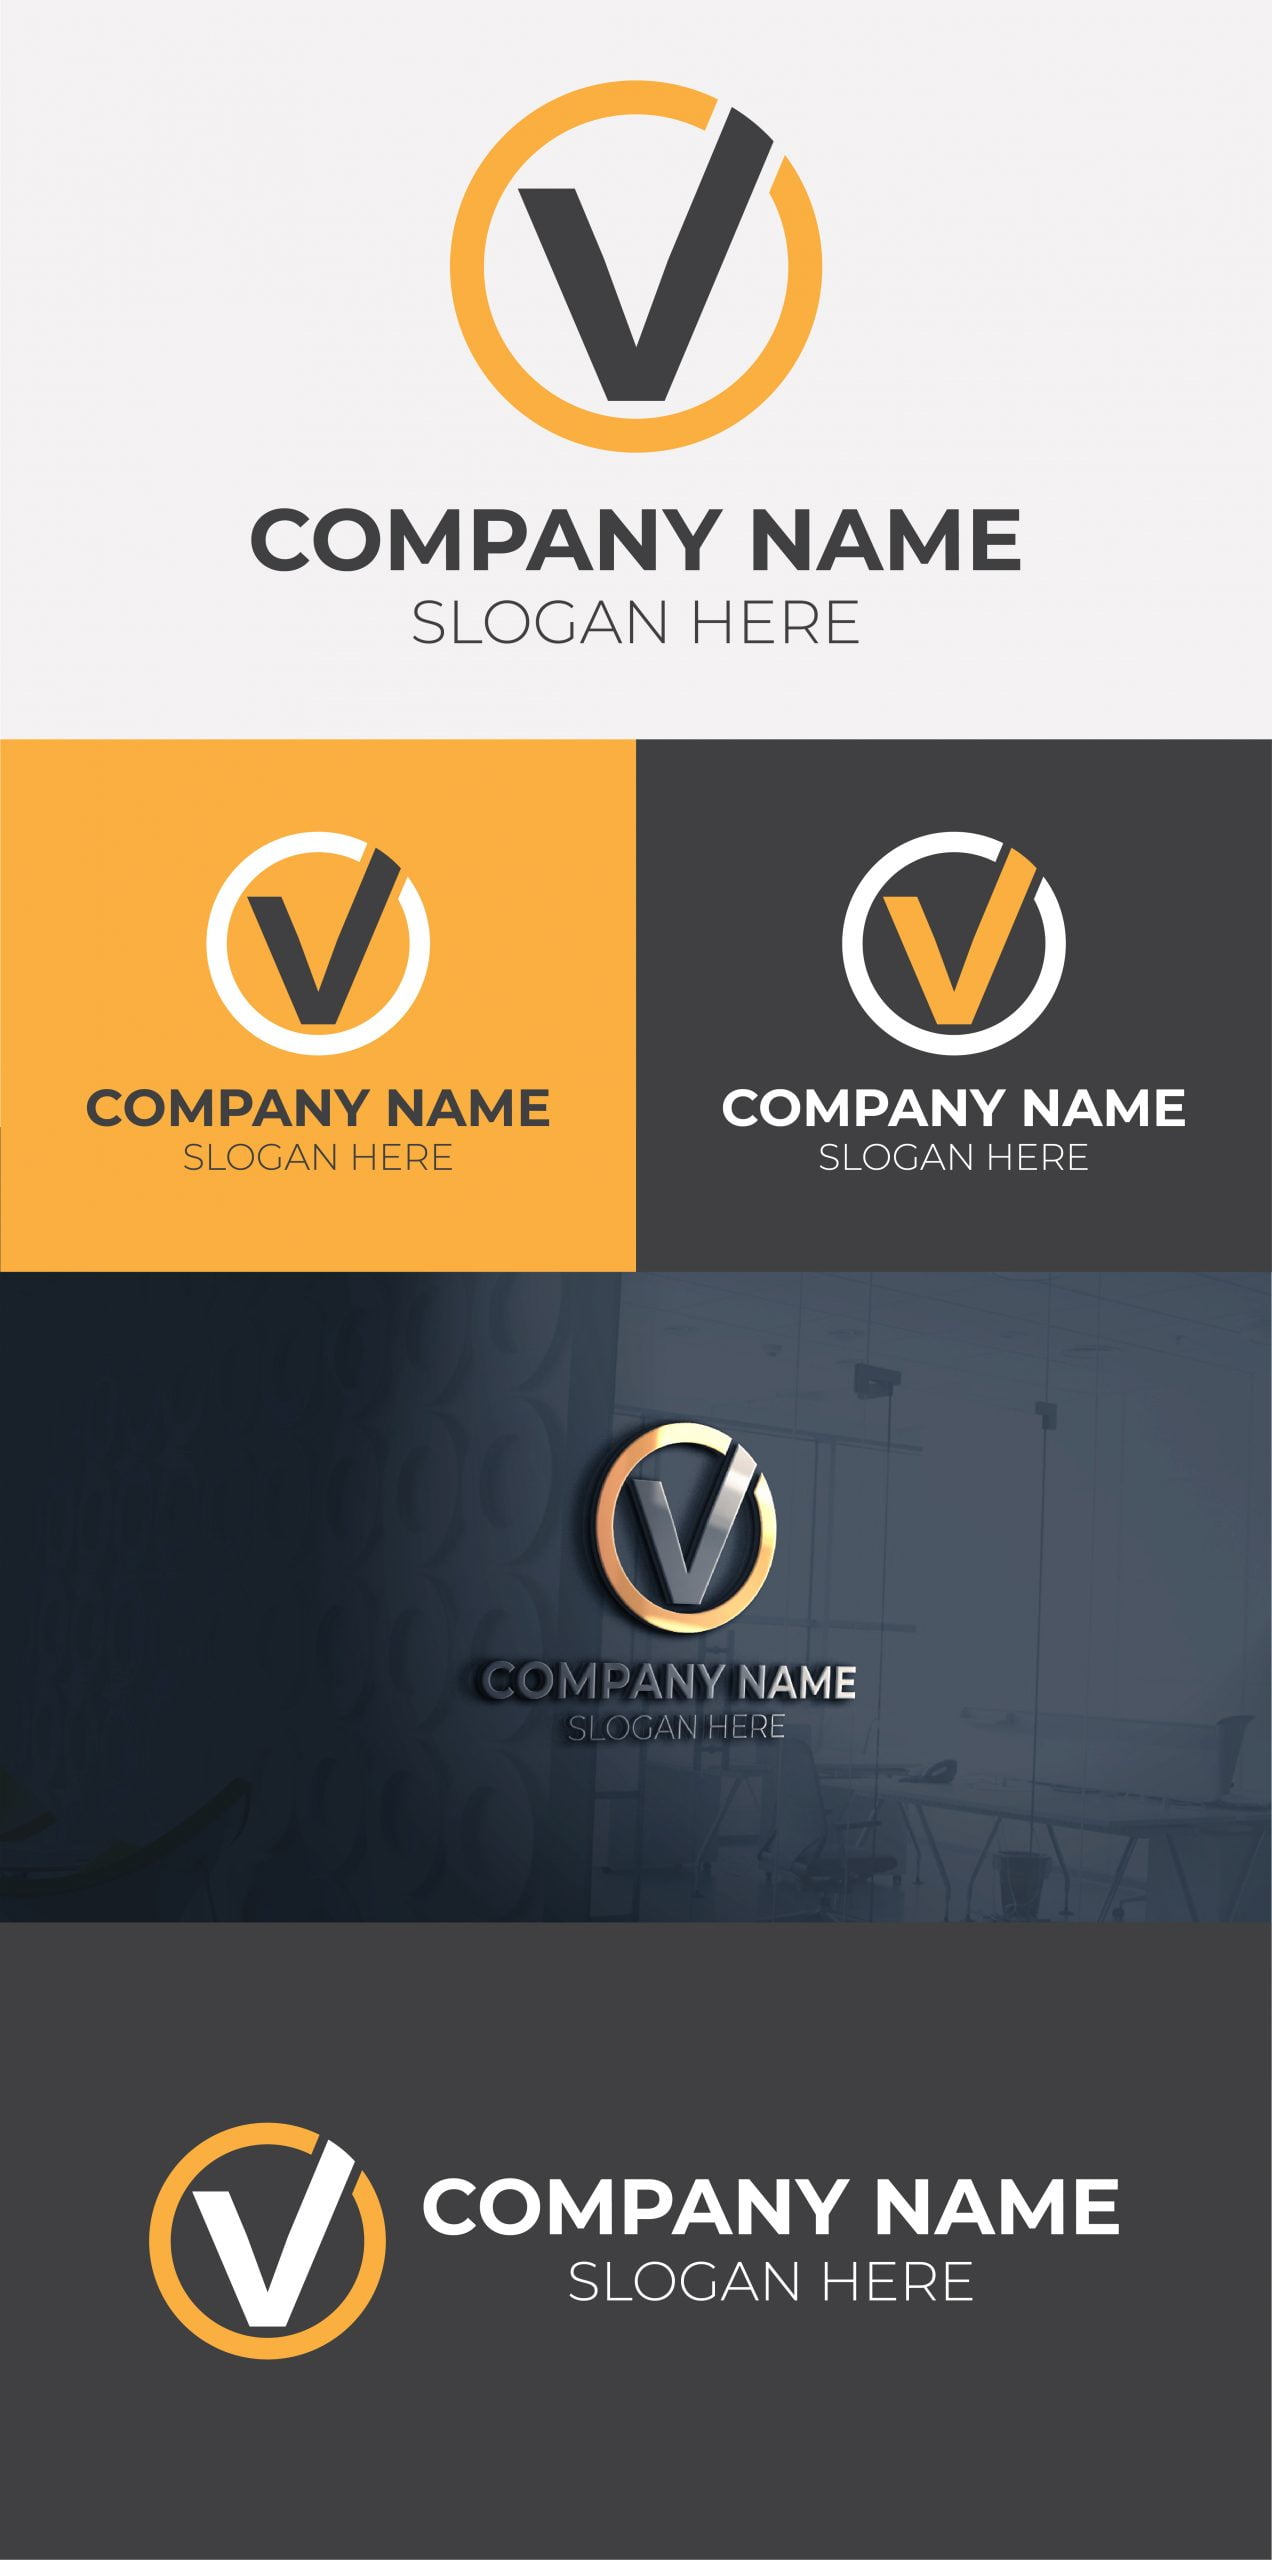 V Logo - Free Vectors & PSDs to Download